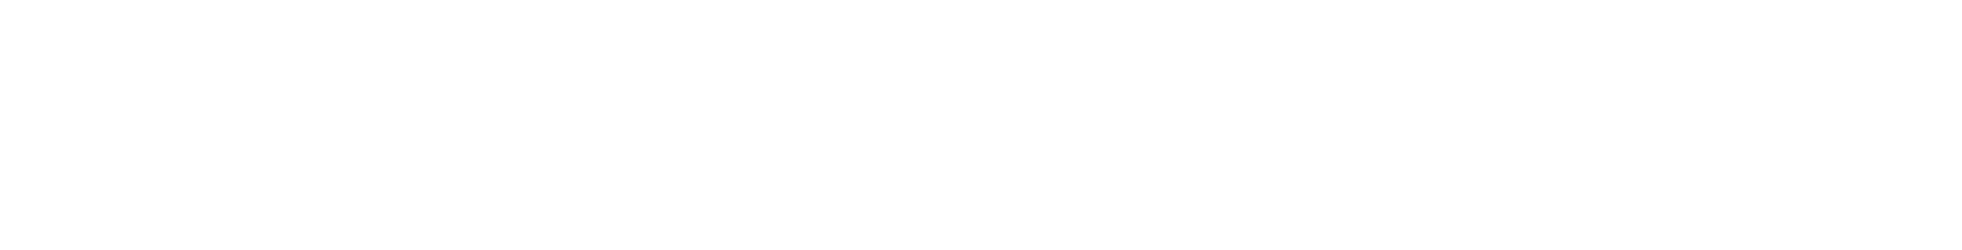 Fanatec Logo - Project CARS 2 / Fanatec Competition